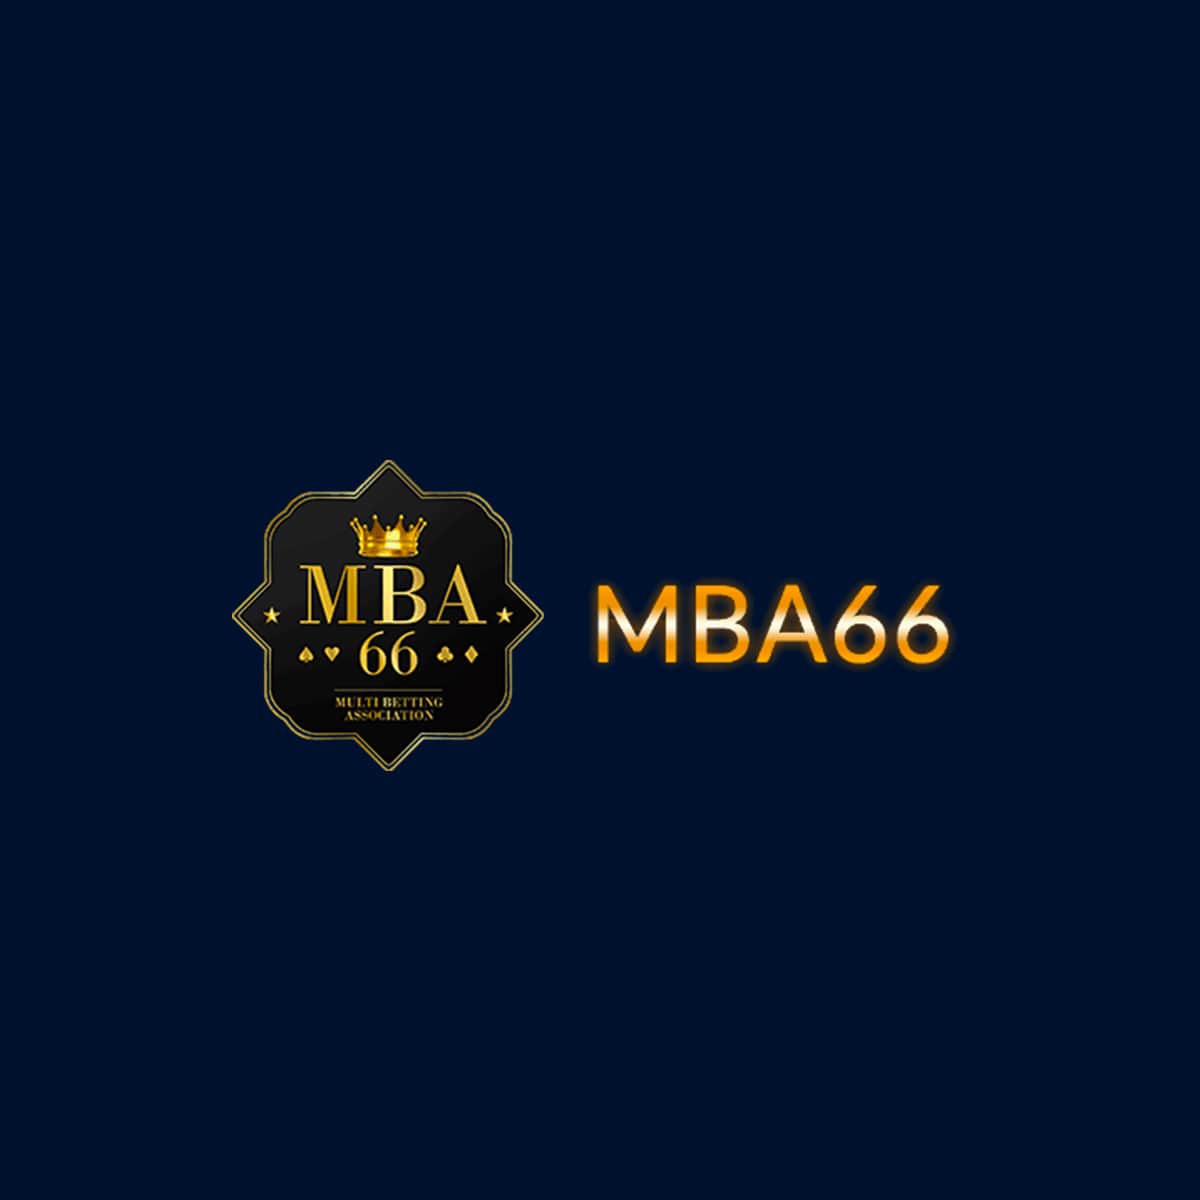 MBA66 Casino